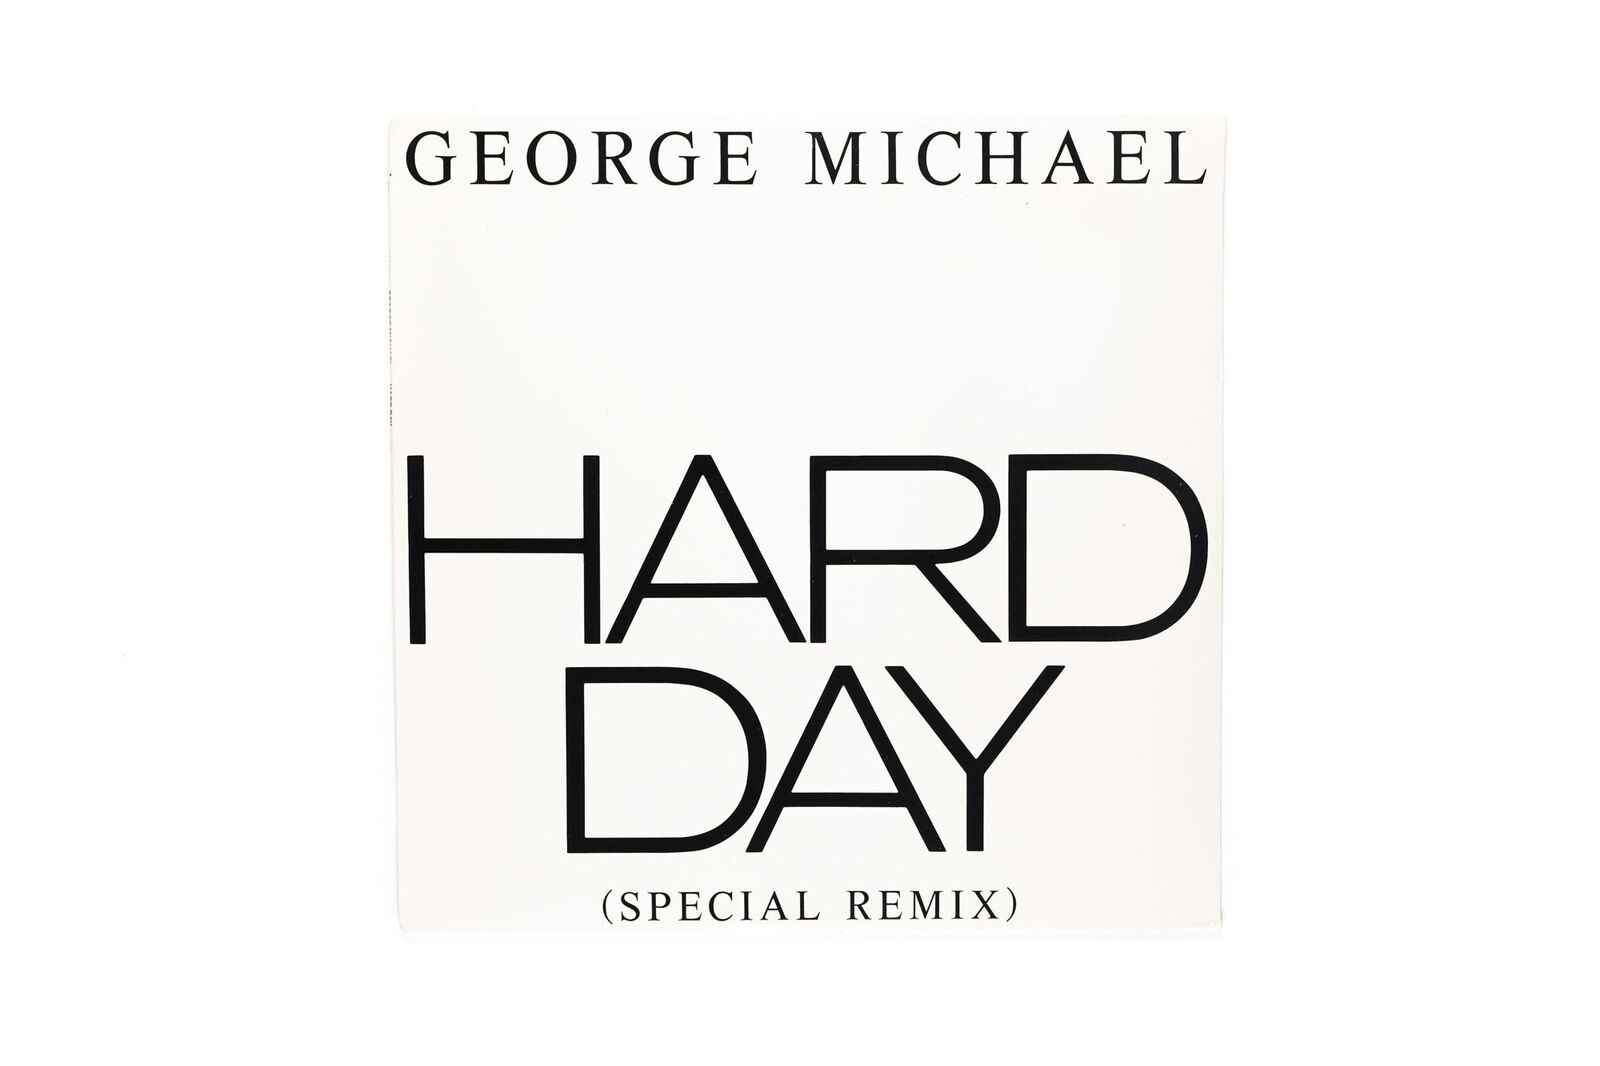 George Michael - Hard Day (Special Remix) - Vinyl LP Record - 1987